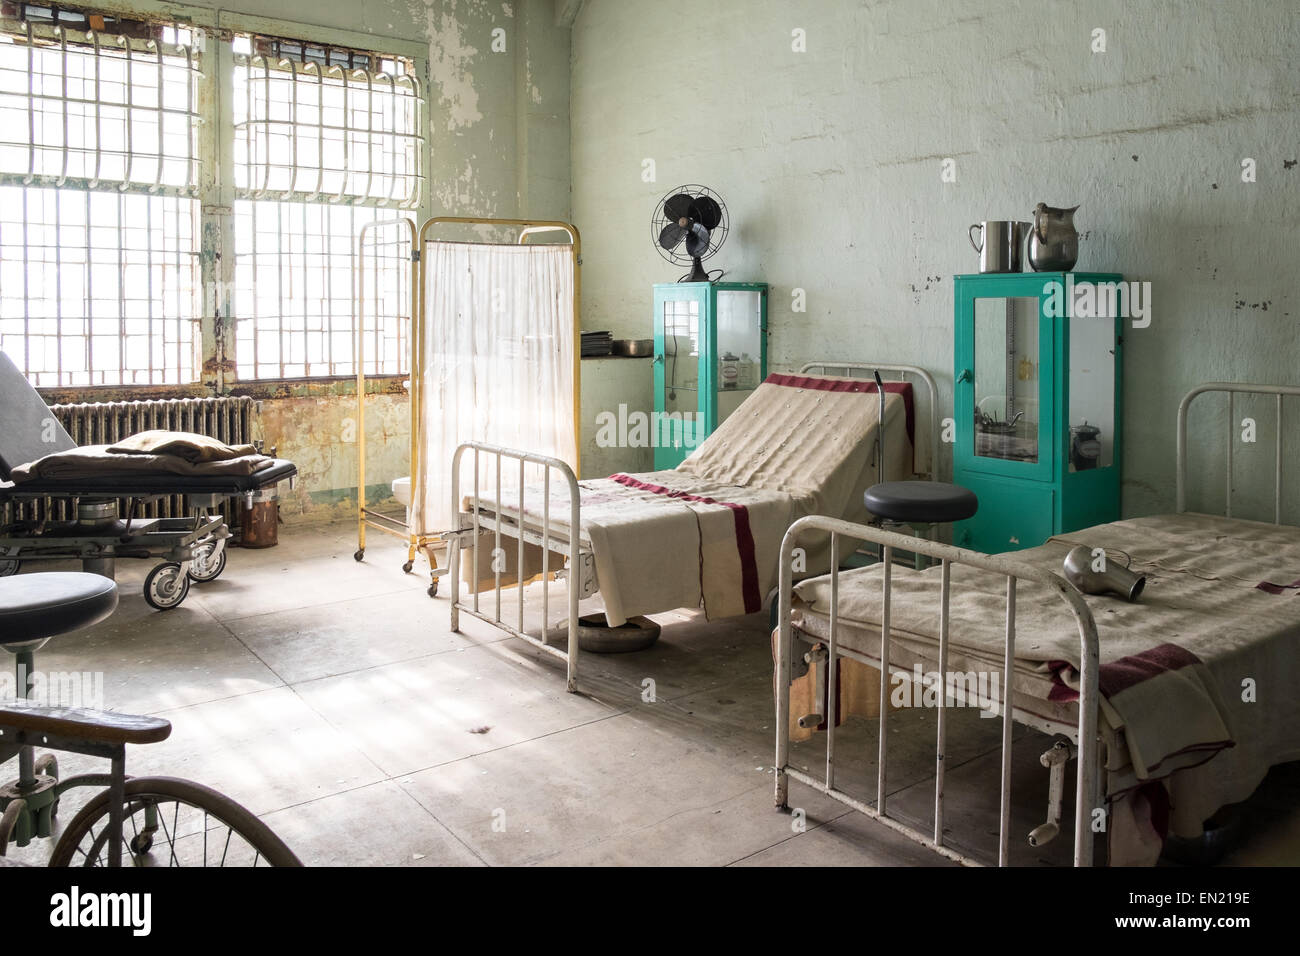 Alcatraz prison hospital ward Stock Photo